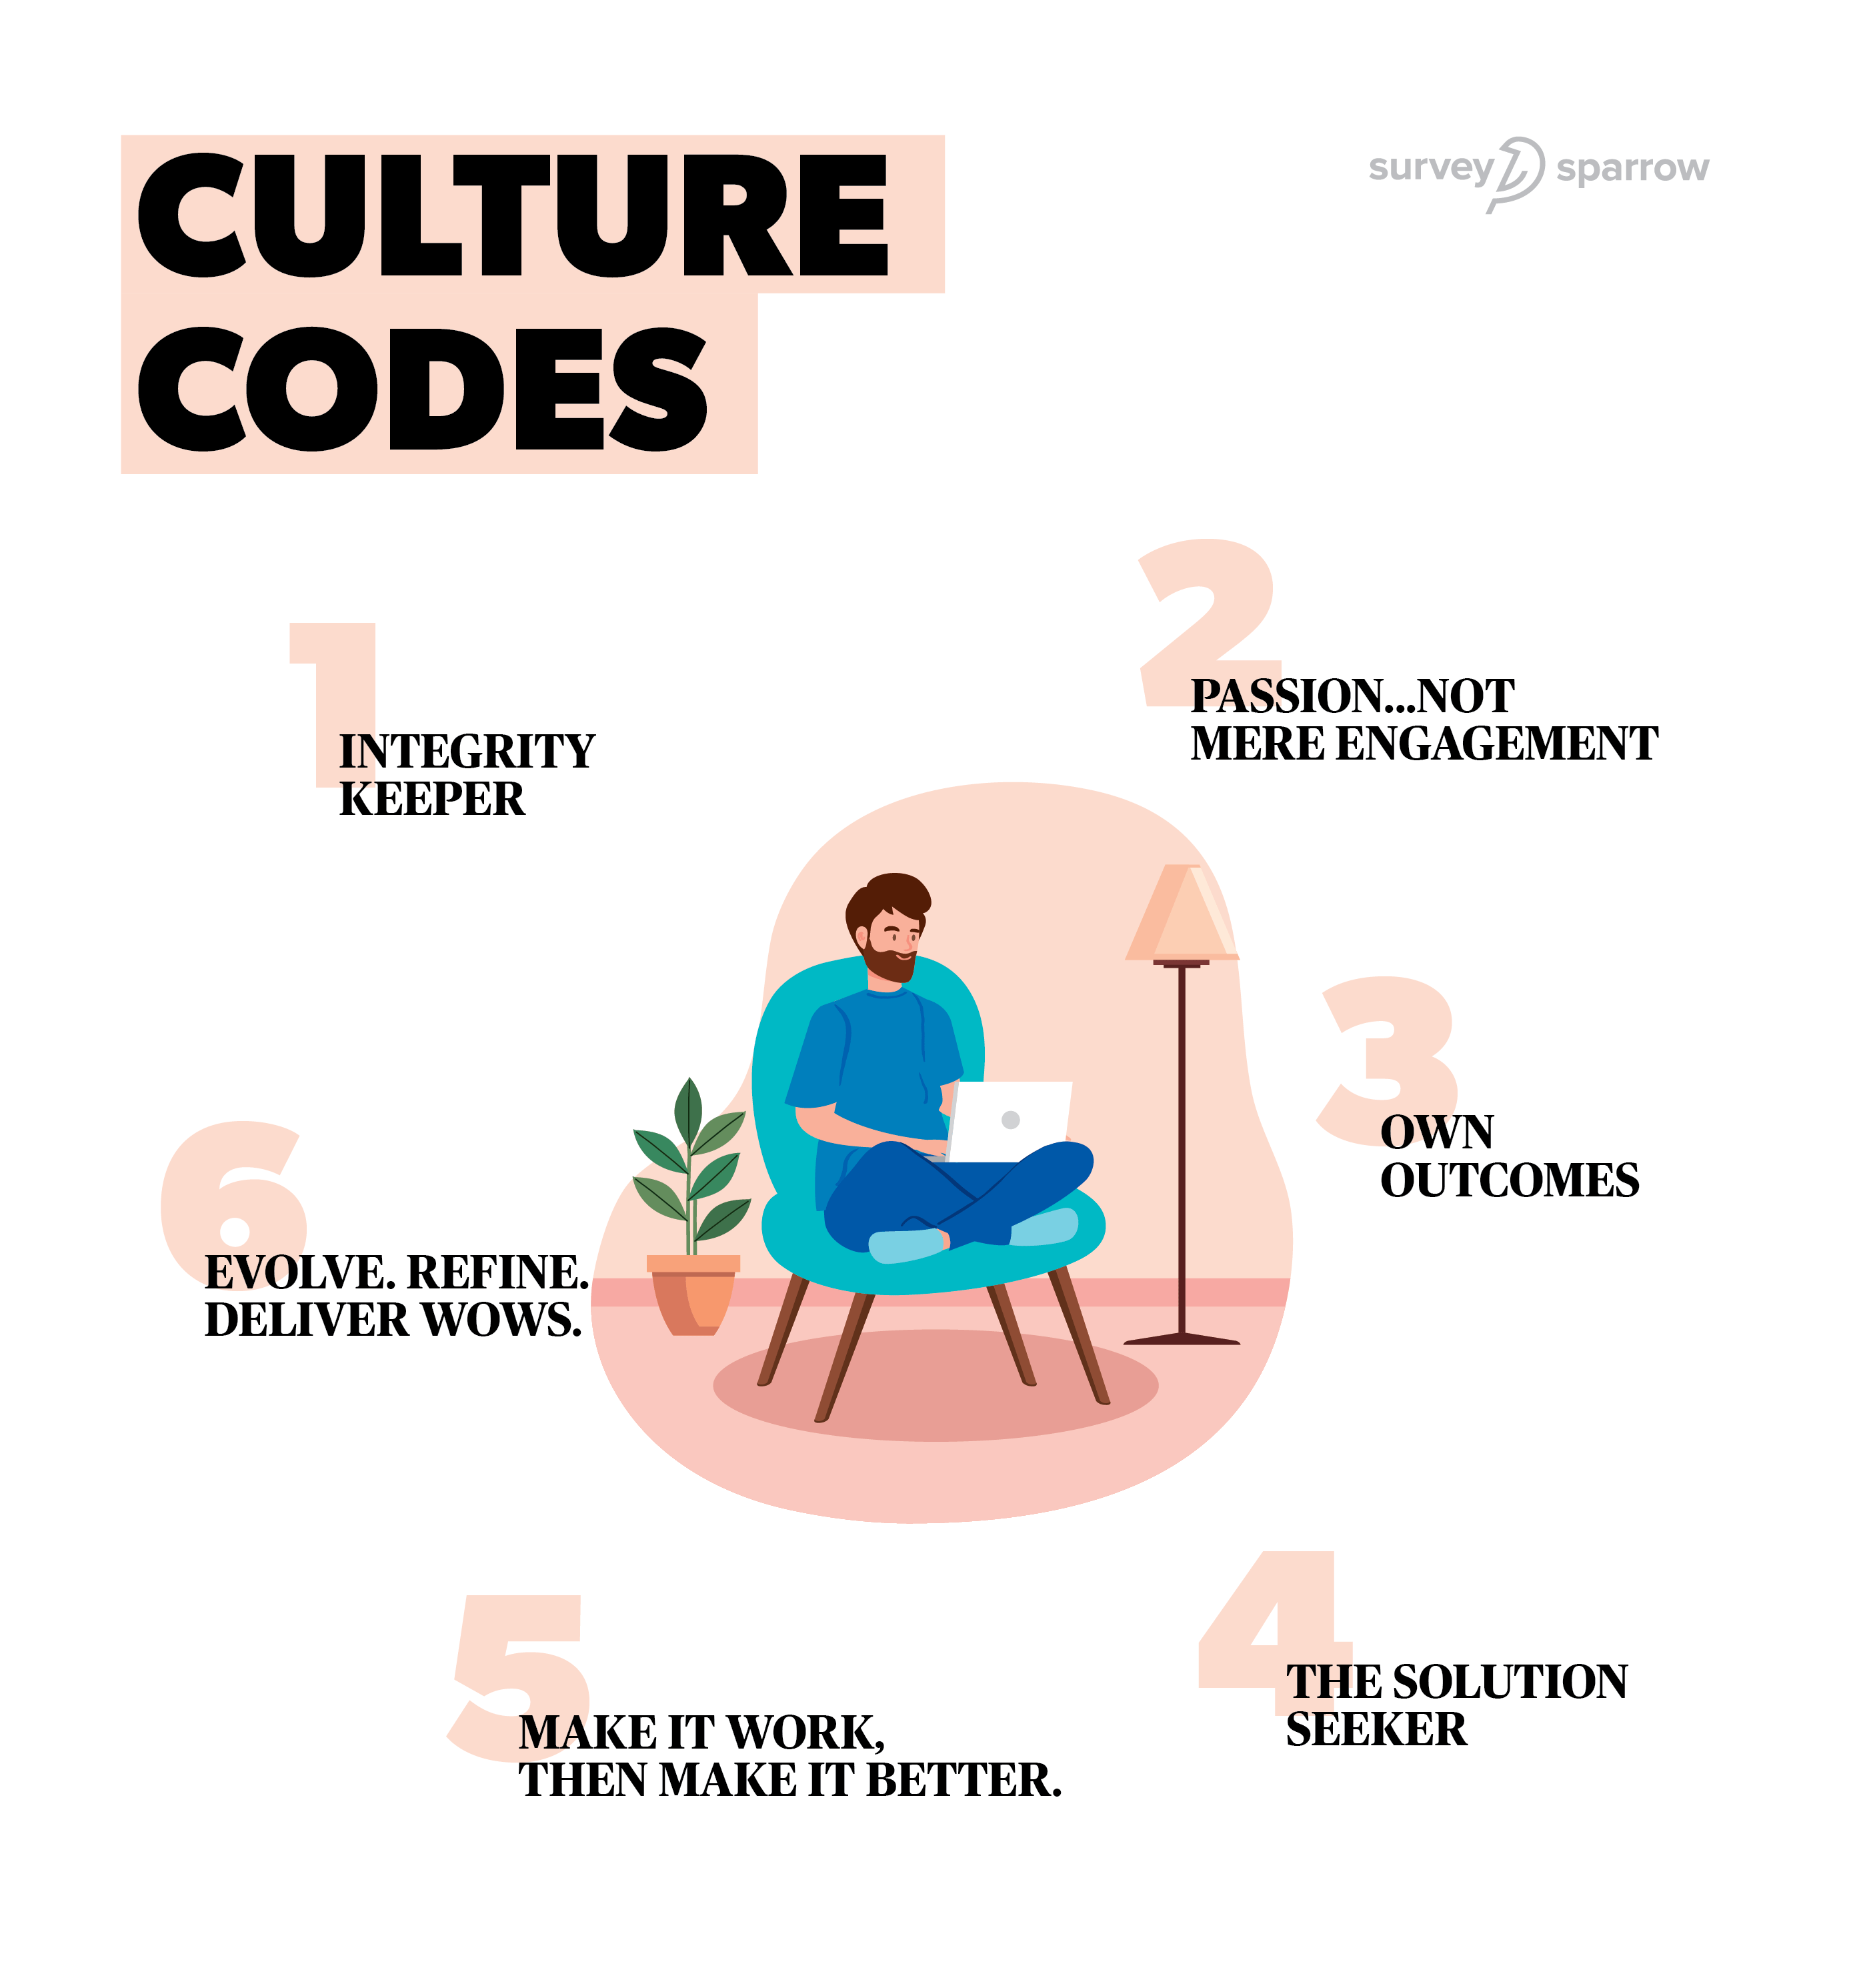 6 culture codes of SurveySparrow.